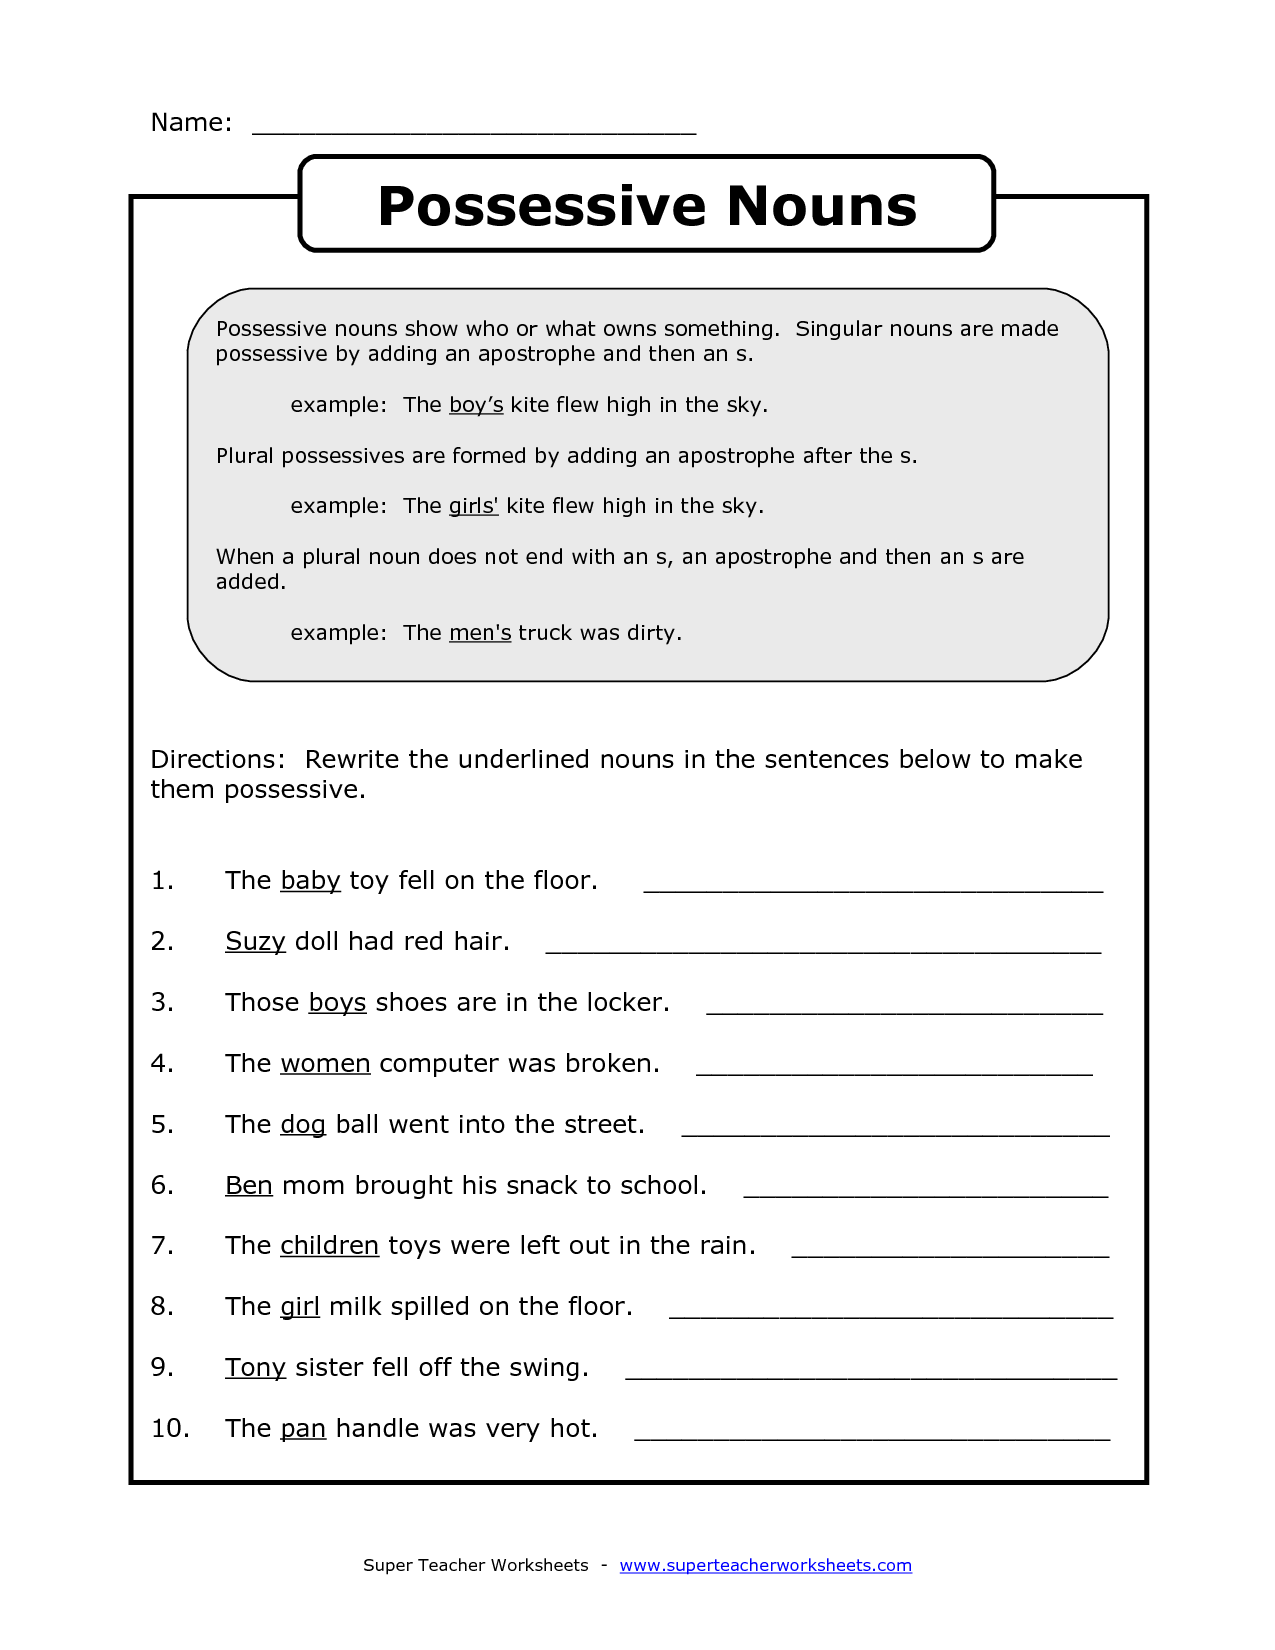 plurals-and-possessives-worksheet